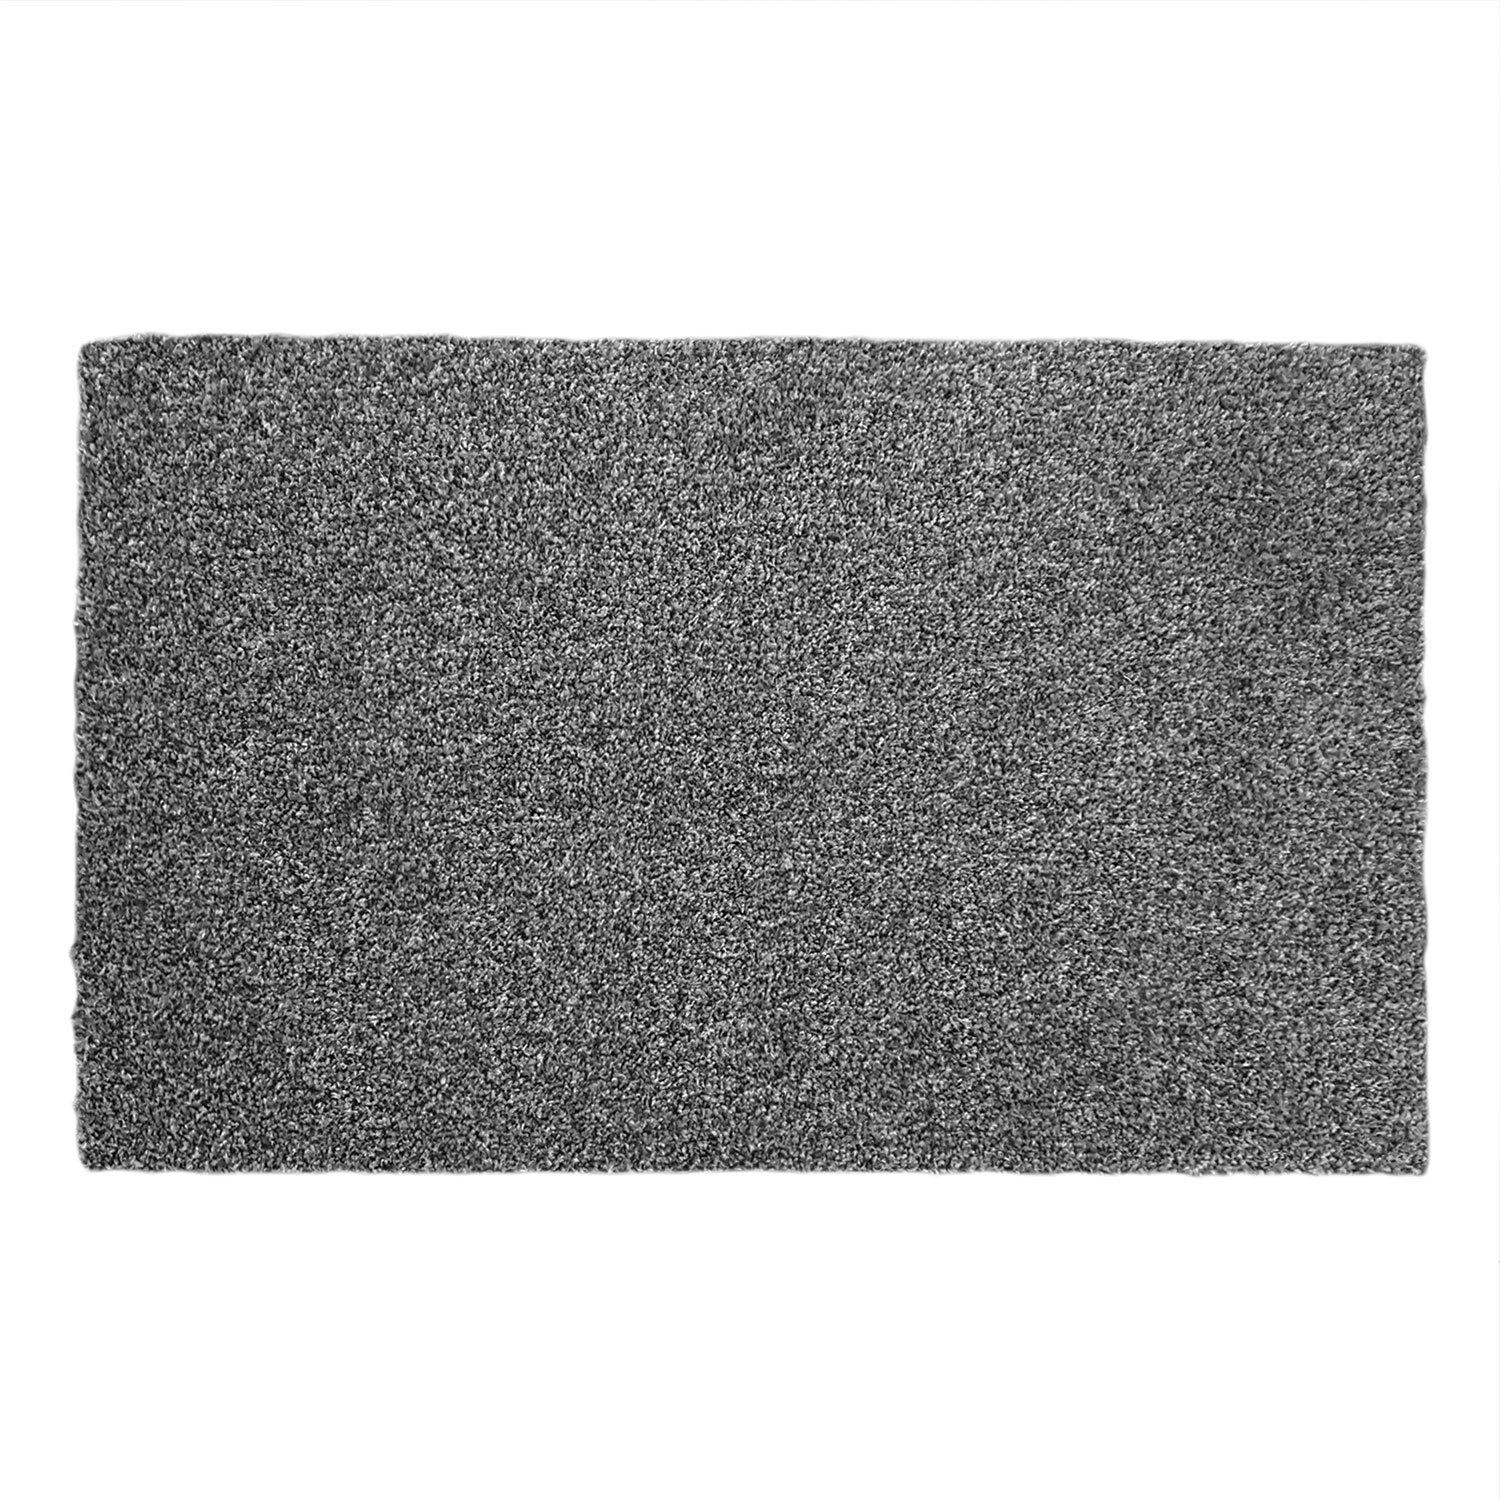 Single Primeur Mud Master Doormat 90 x 60cm in Assorted styles Image 6